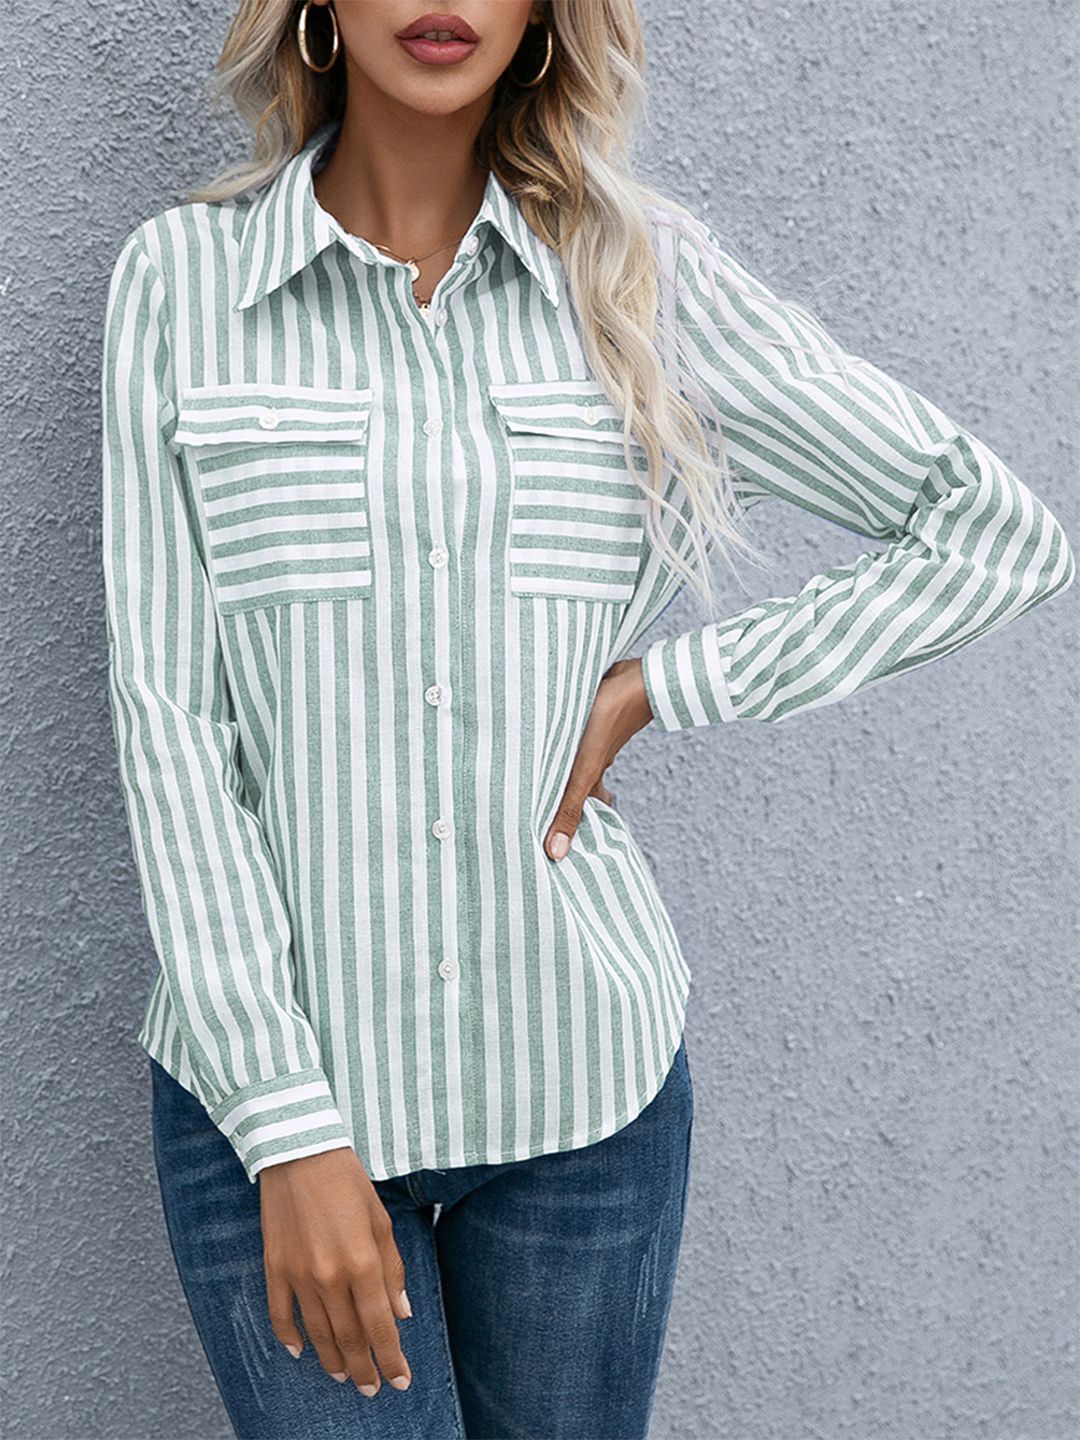 URBANIC Women Green & White Striped Shirt Style Top Price in India